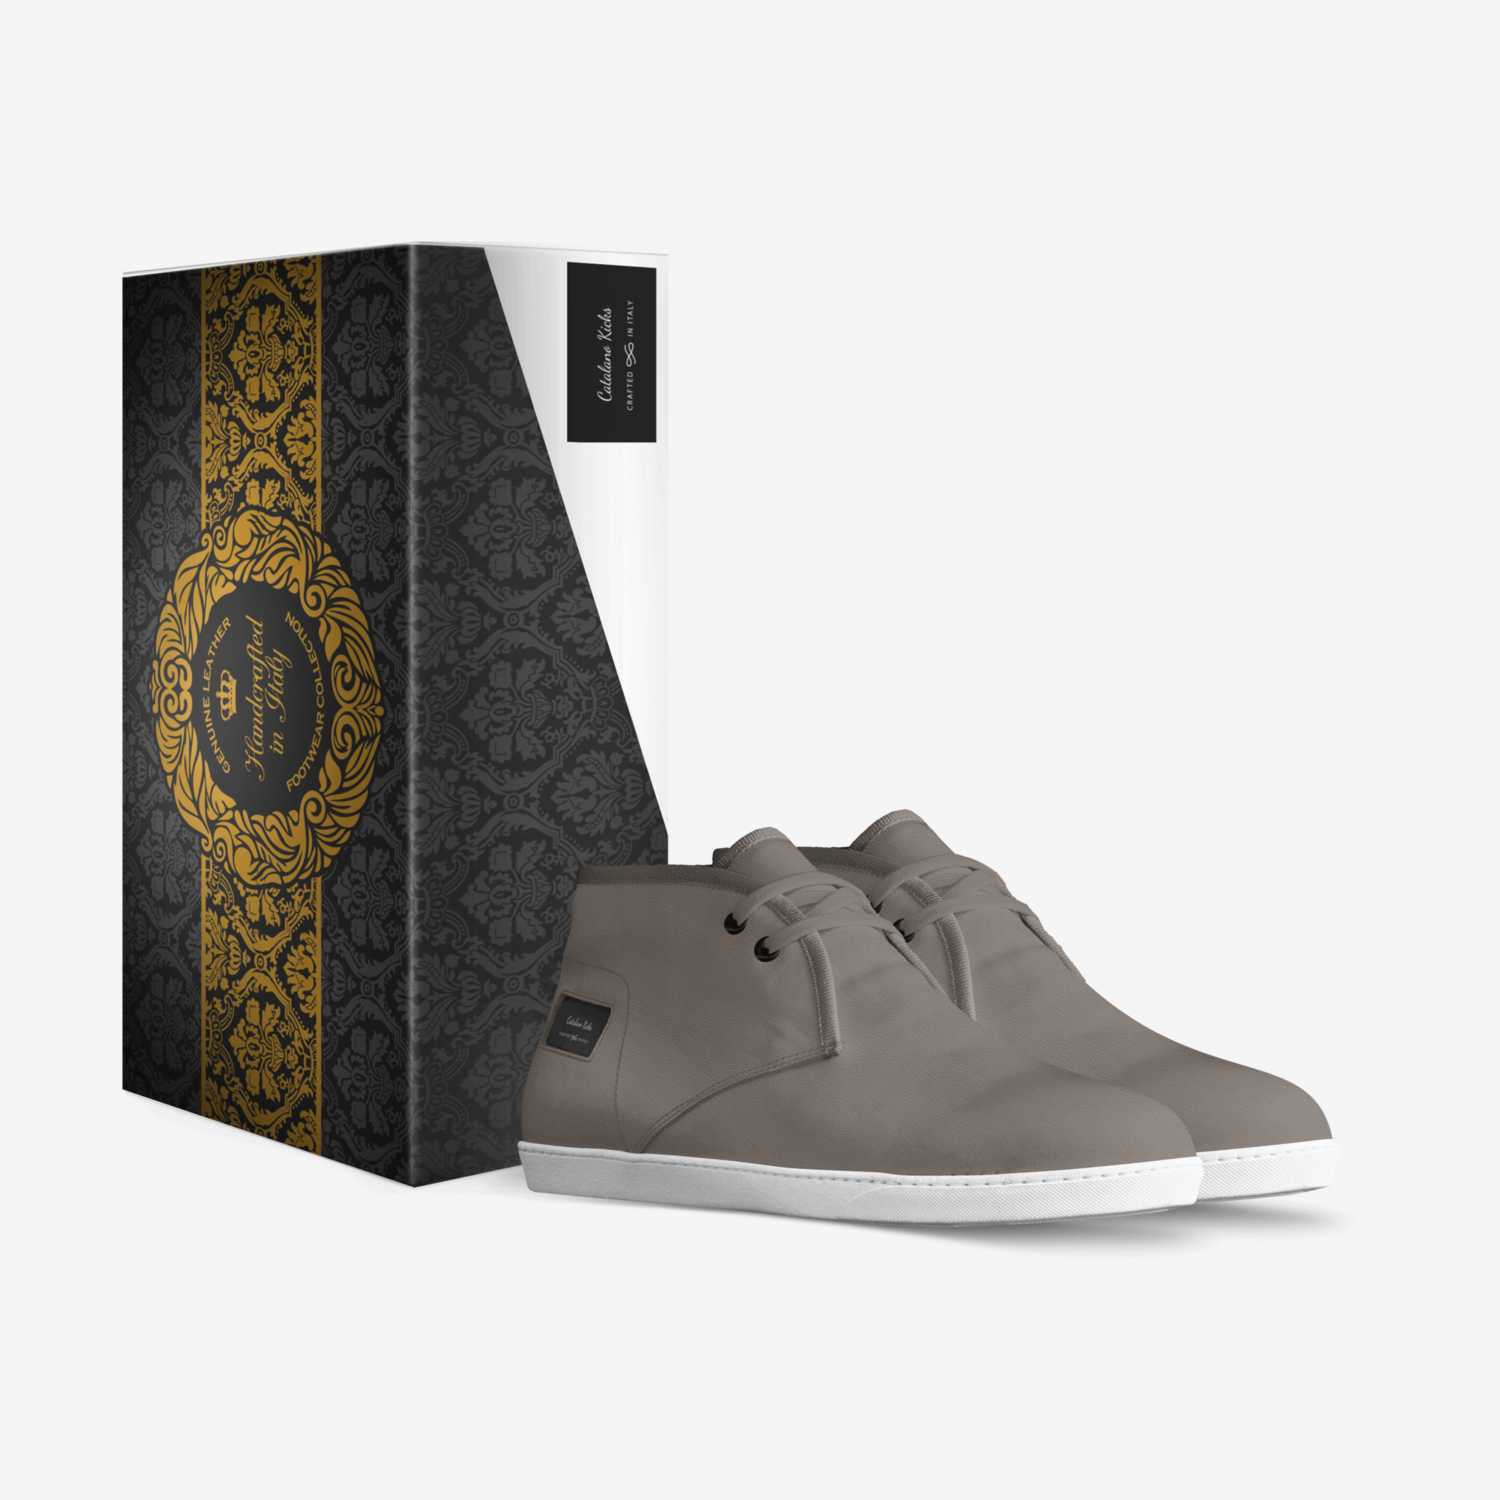 Catalano Kicks custom made in Italy shoes by Anthony C | Box view